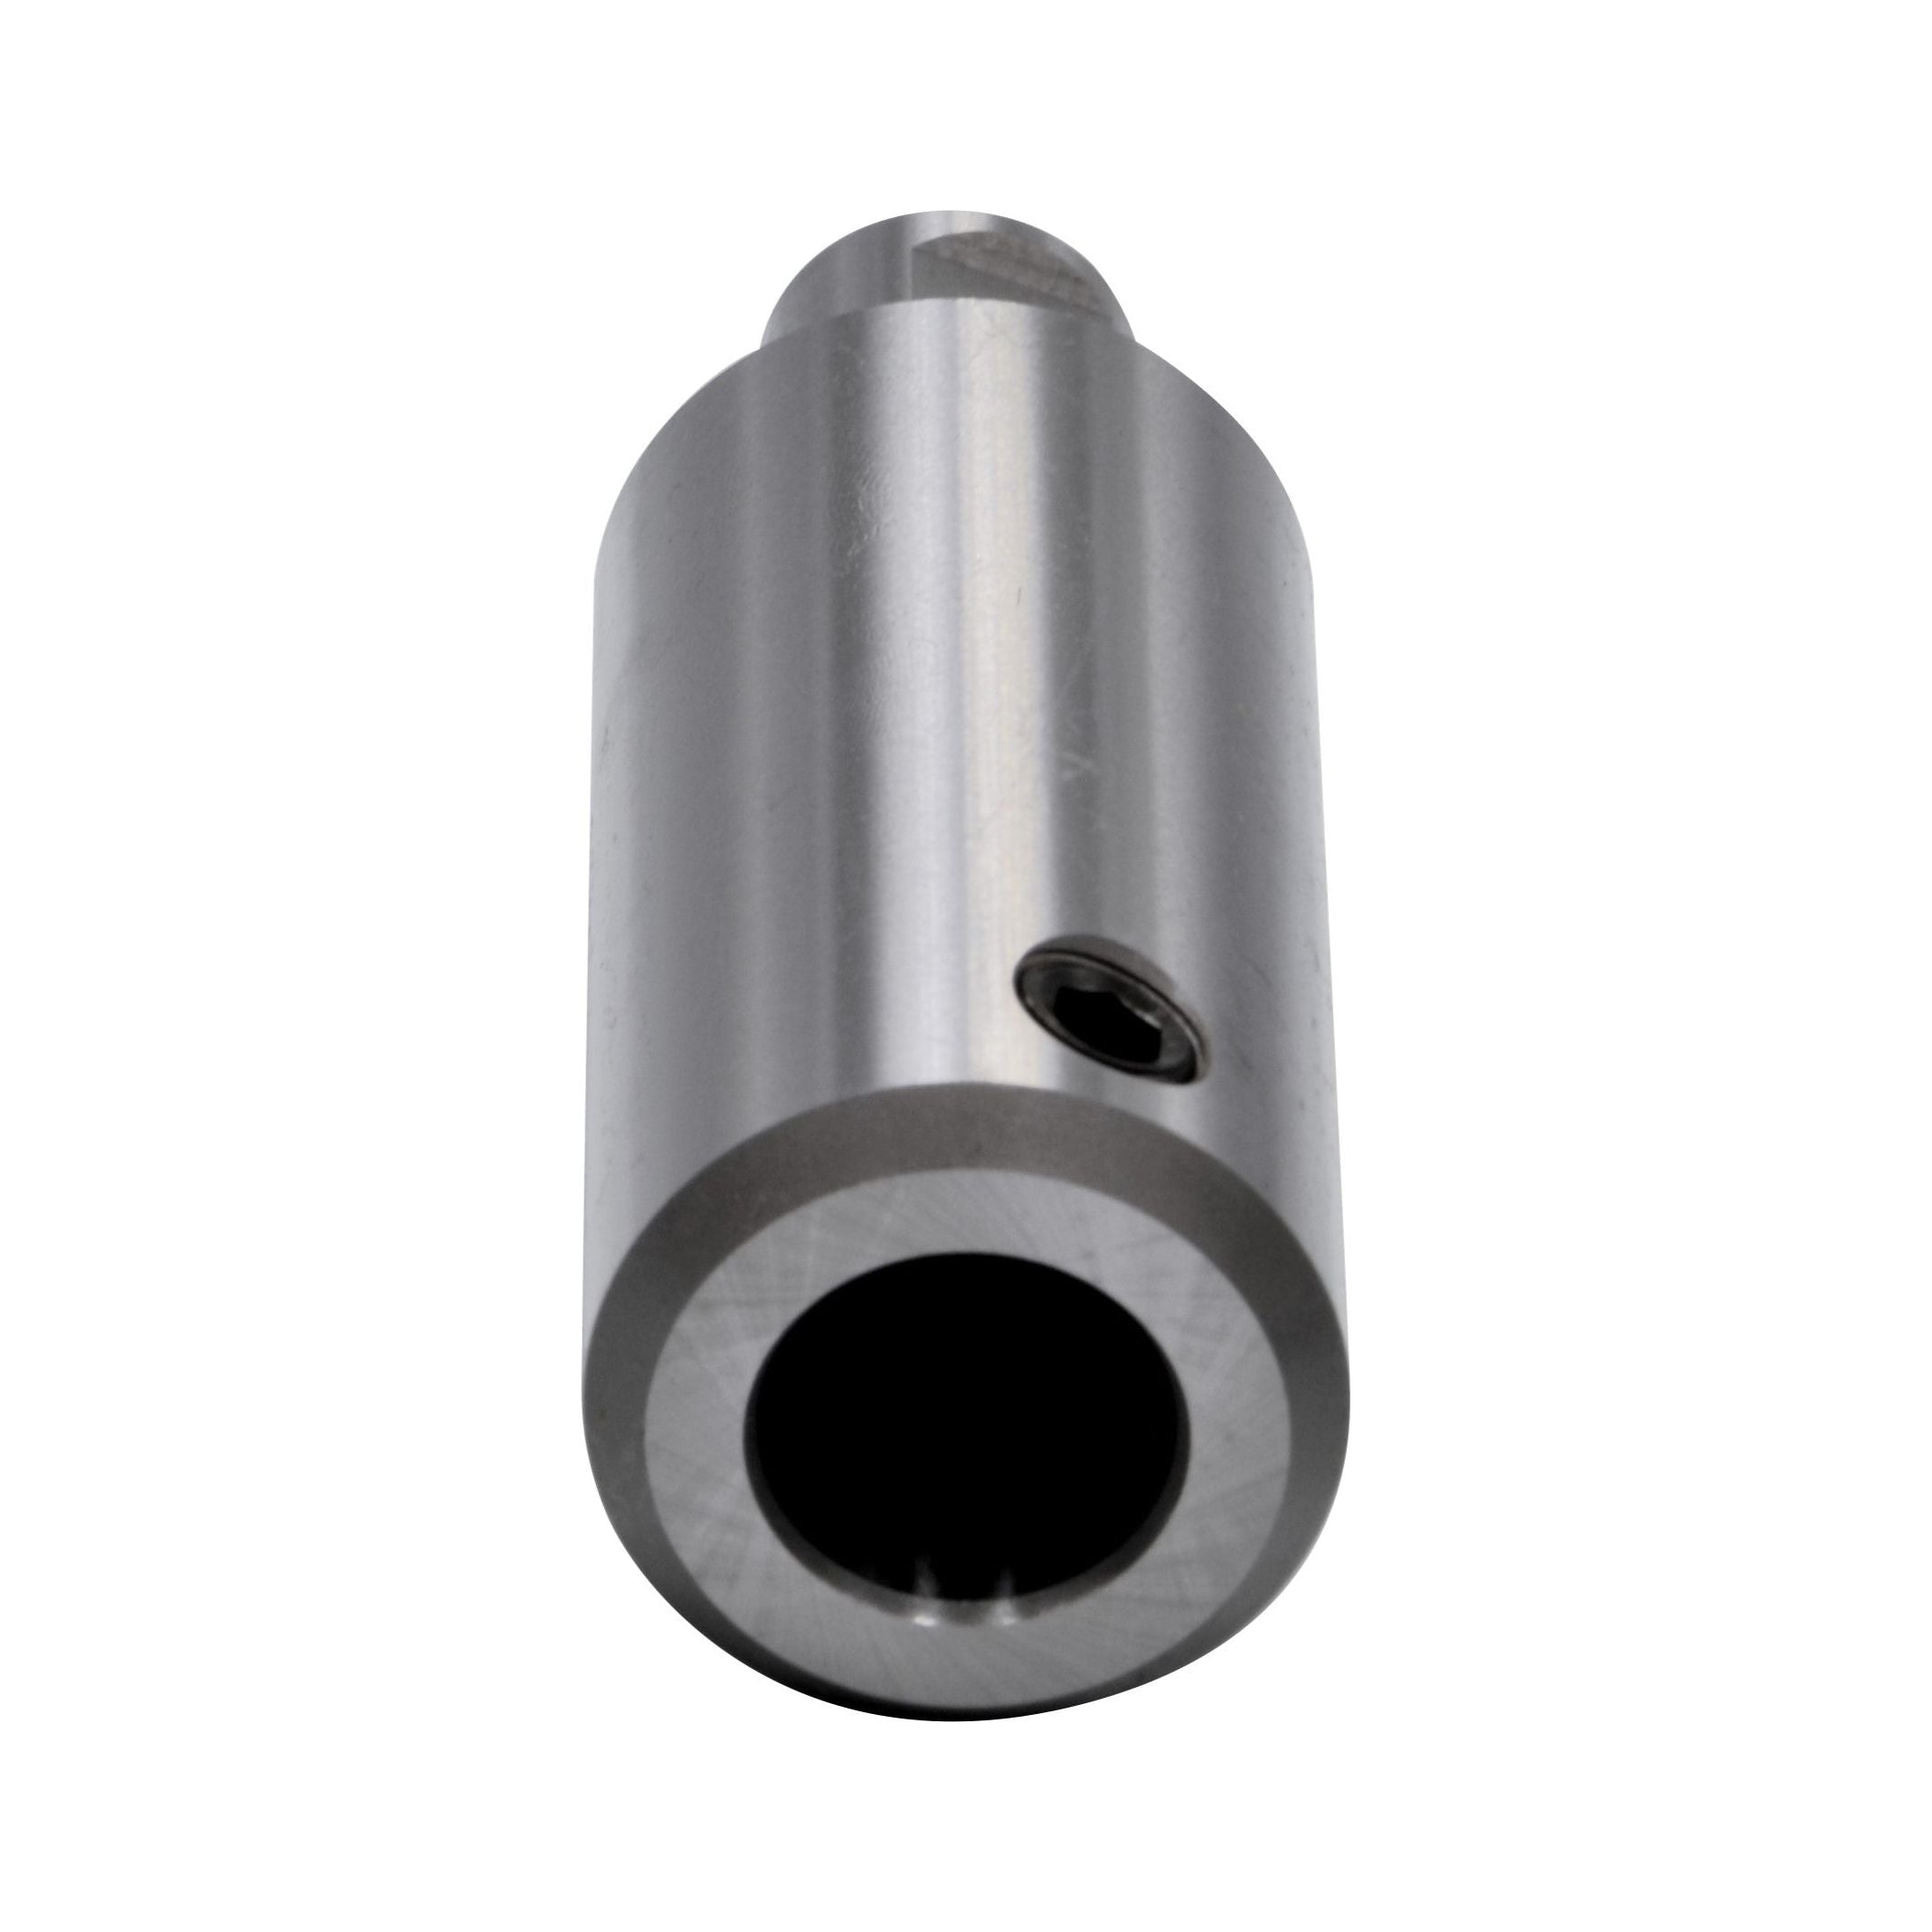 75 mm Annular Cutter Extension Socket with Universal Weldon Shank